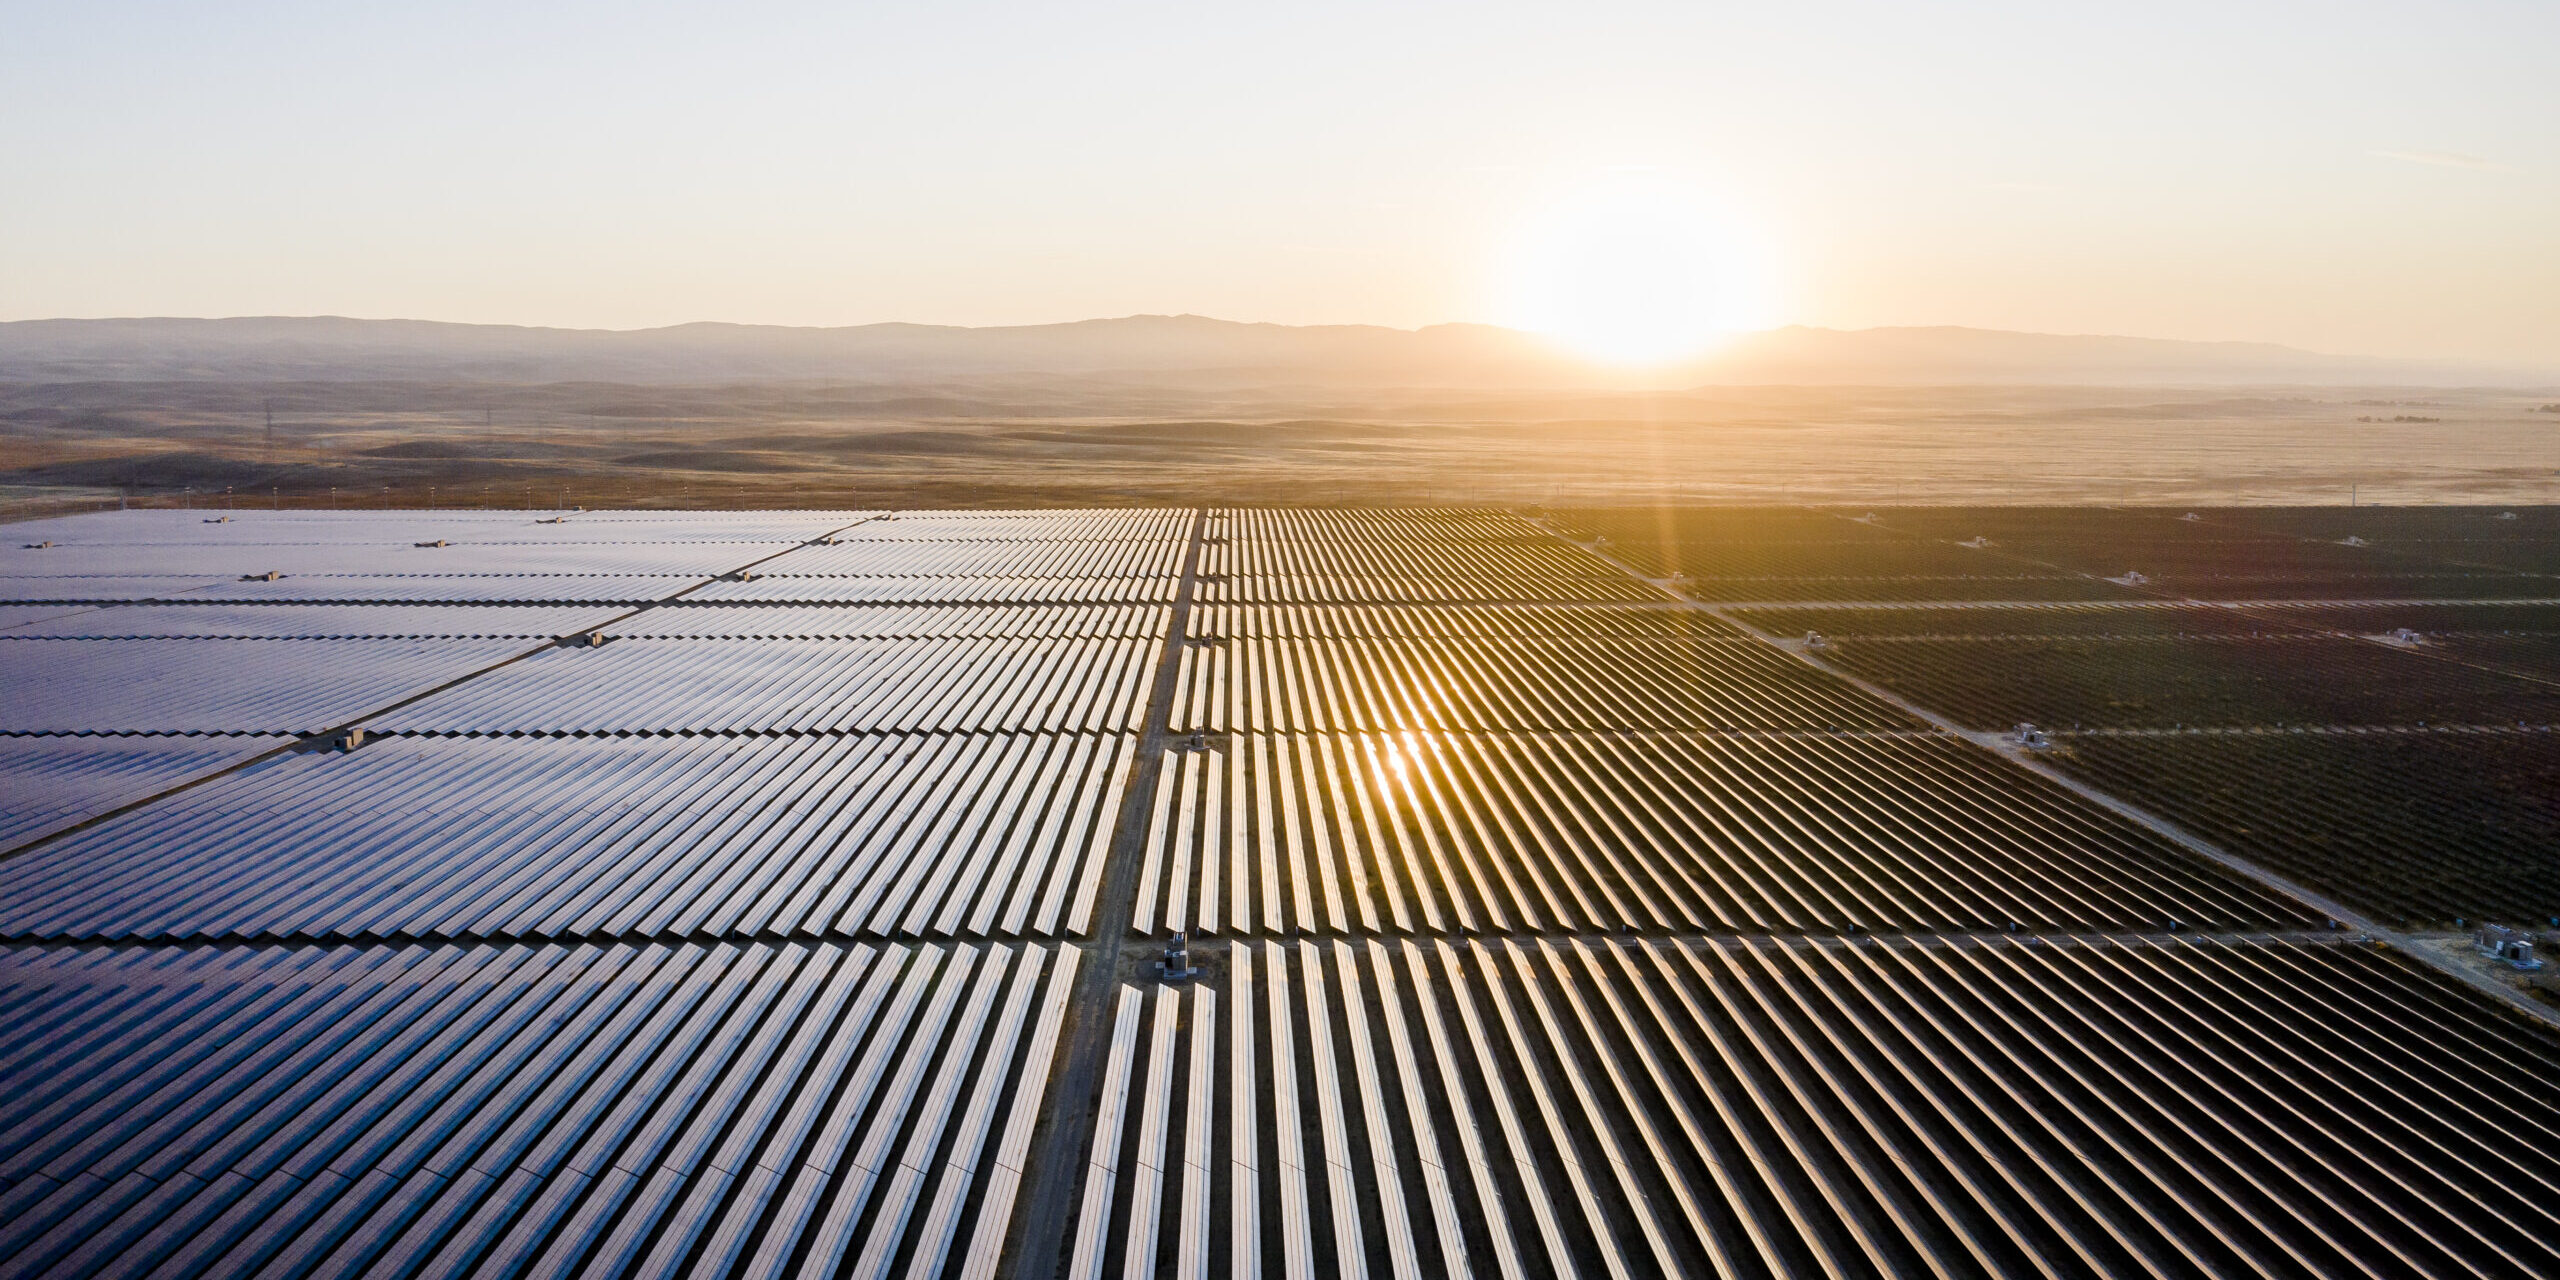 Aerial view of huge solar farm in the desert